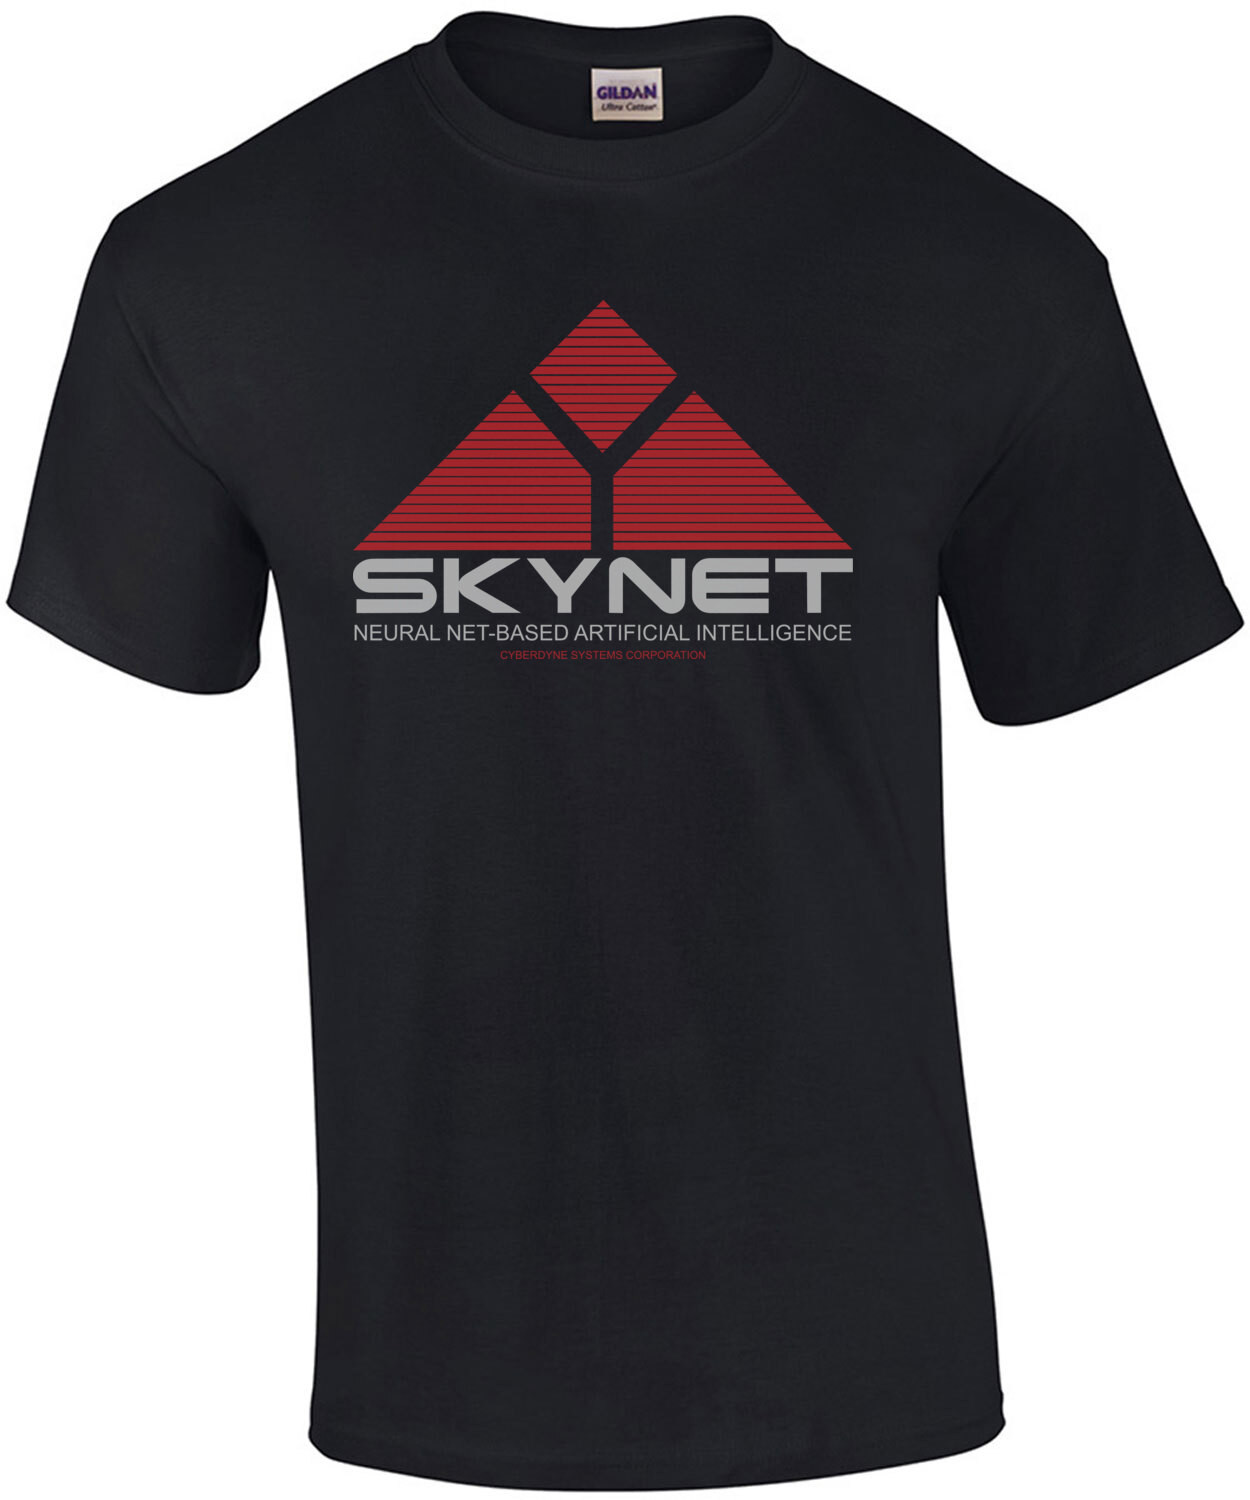 Skynet - Neural net-based artificial intelligence - cyberdyne systems corporation - Terminator - 80's T-Shirt